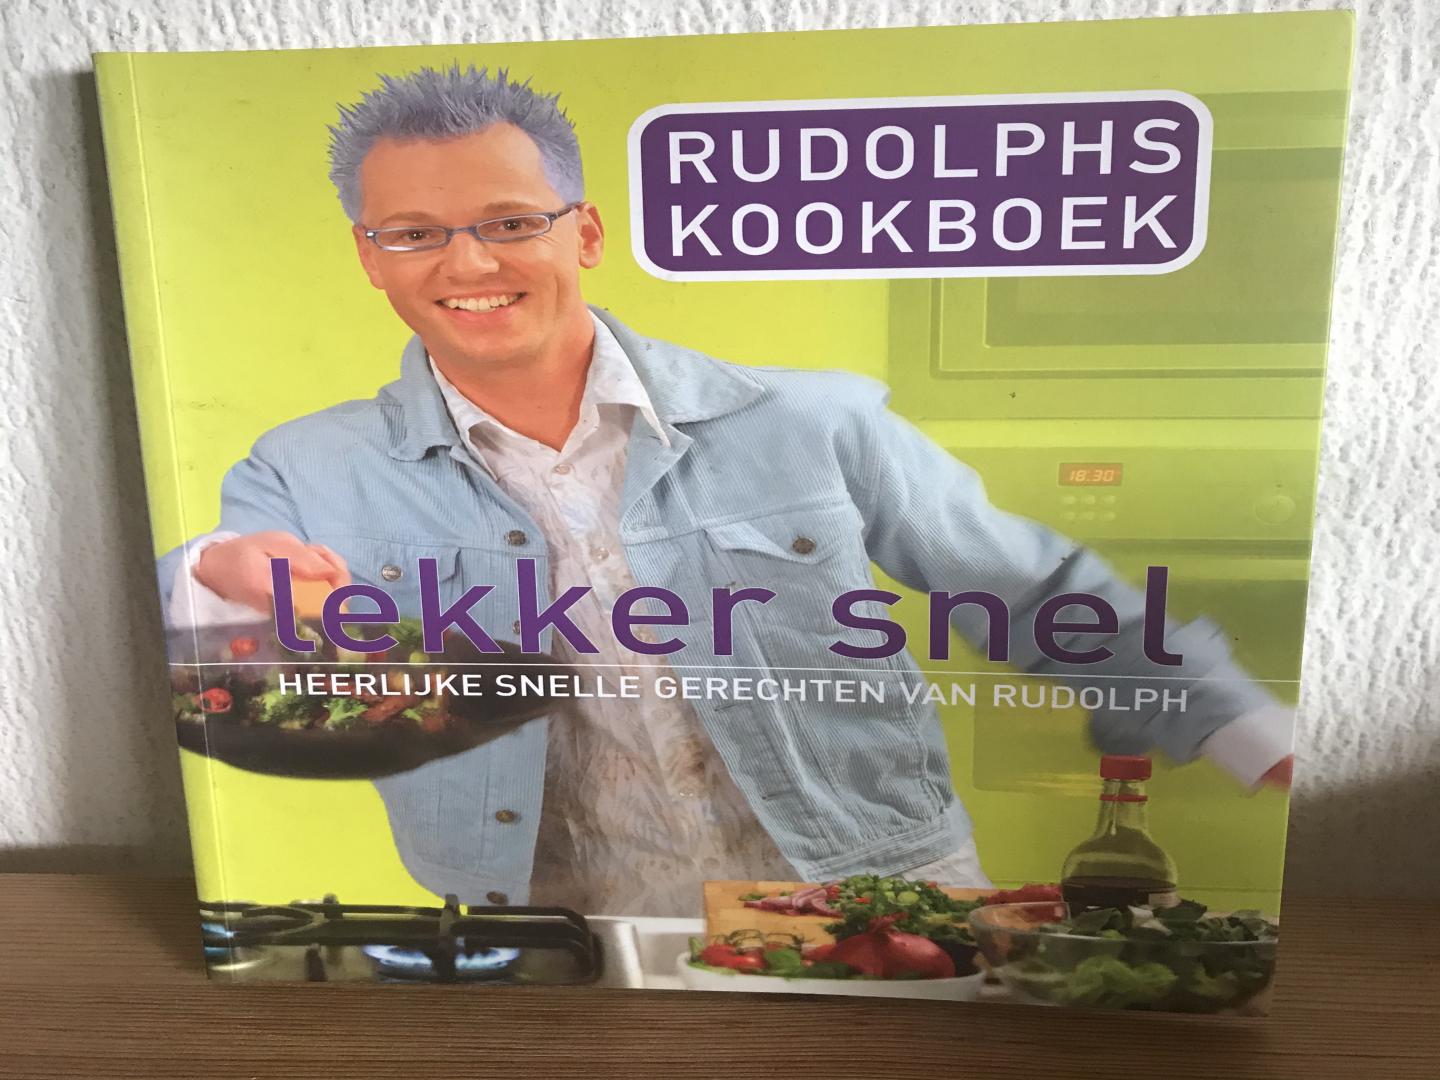  - Rudolphs kookboek - lekker snel